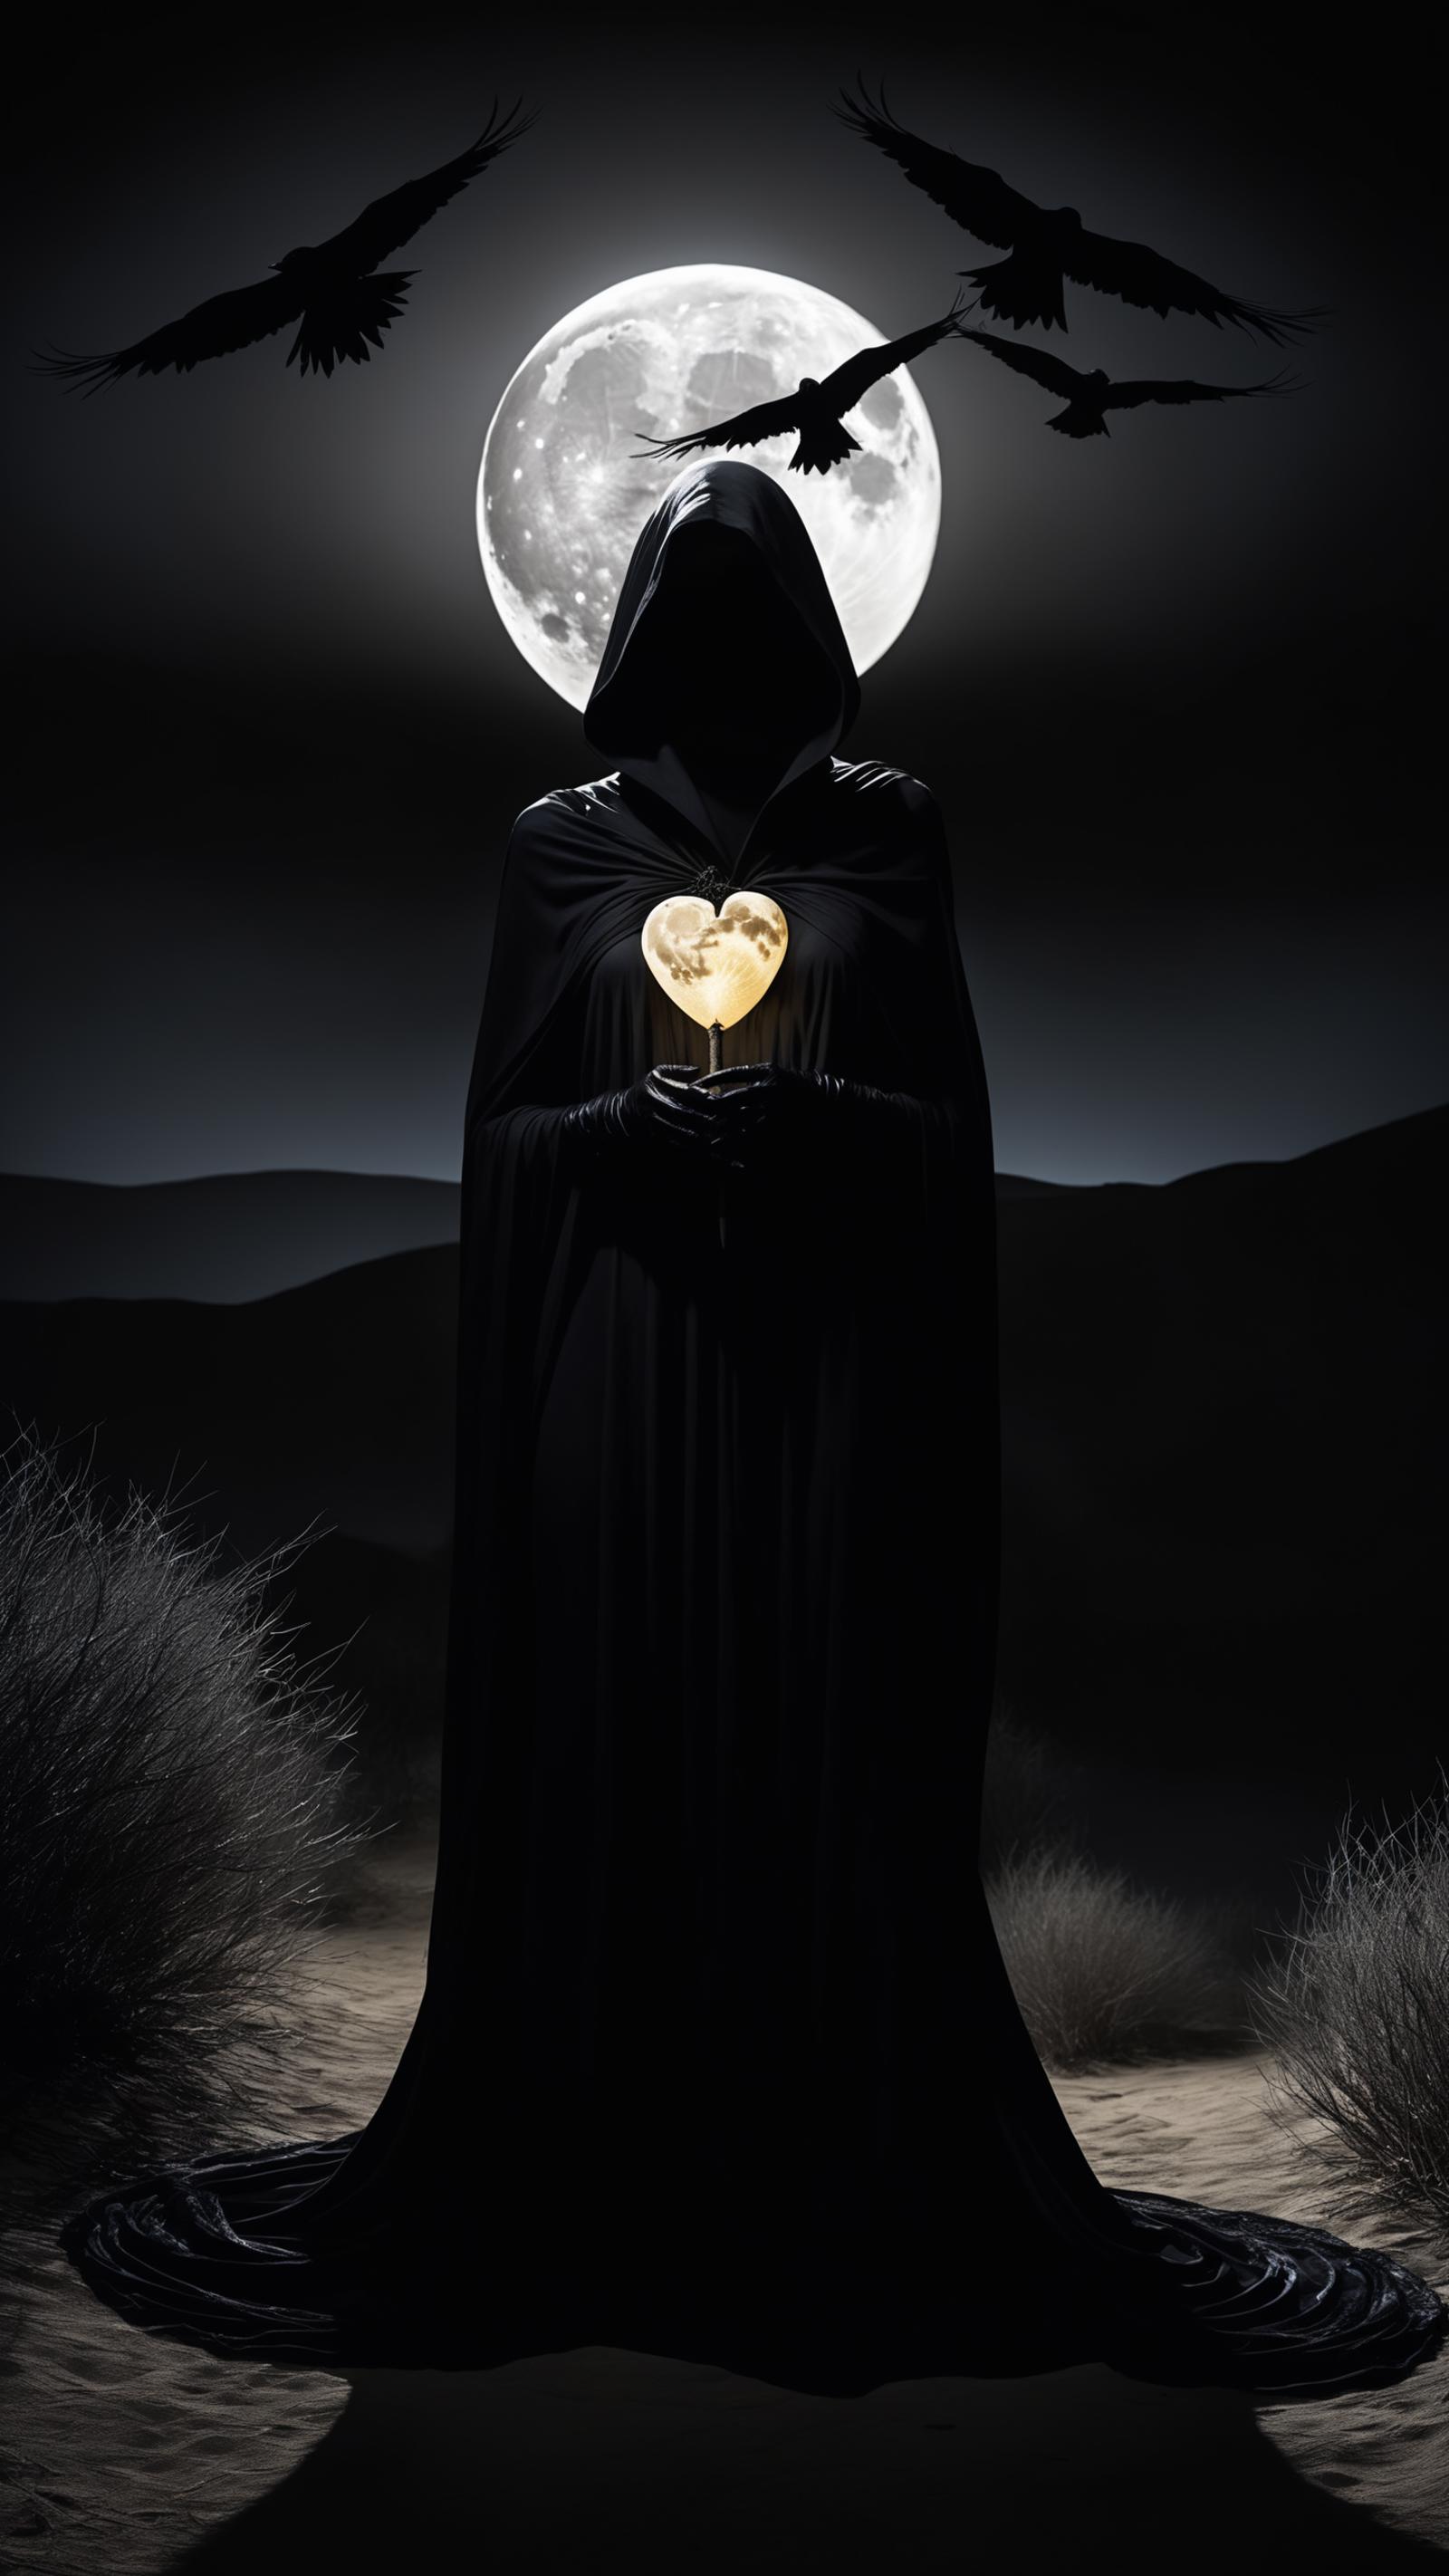 A dark figure in a black cloak holding a heart-shaped lantern under a full moon.